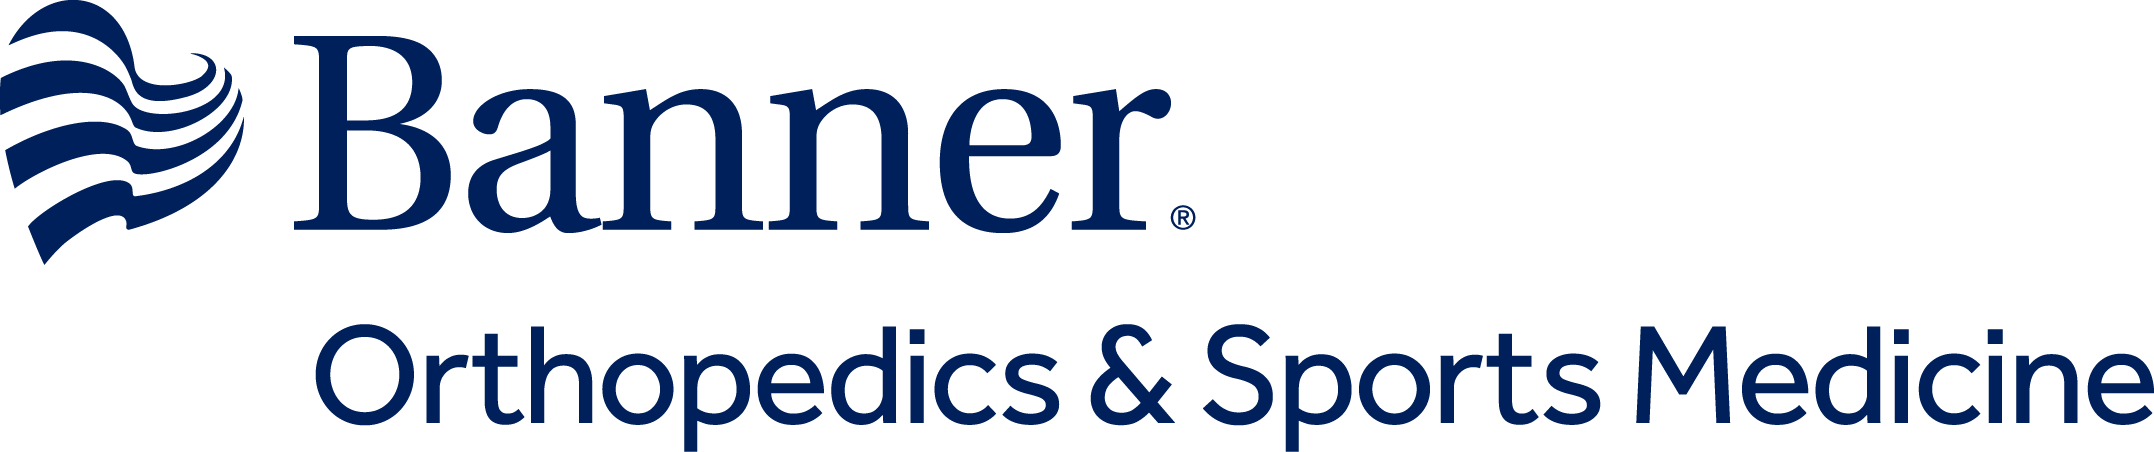 Banner Health Logo for Orthopedics and Sports Medicine